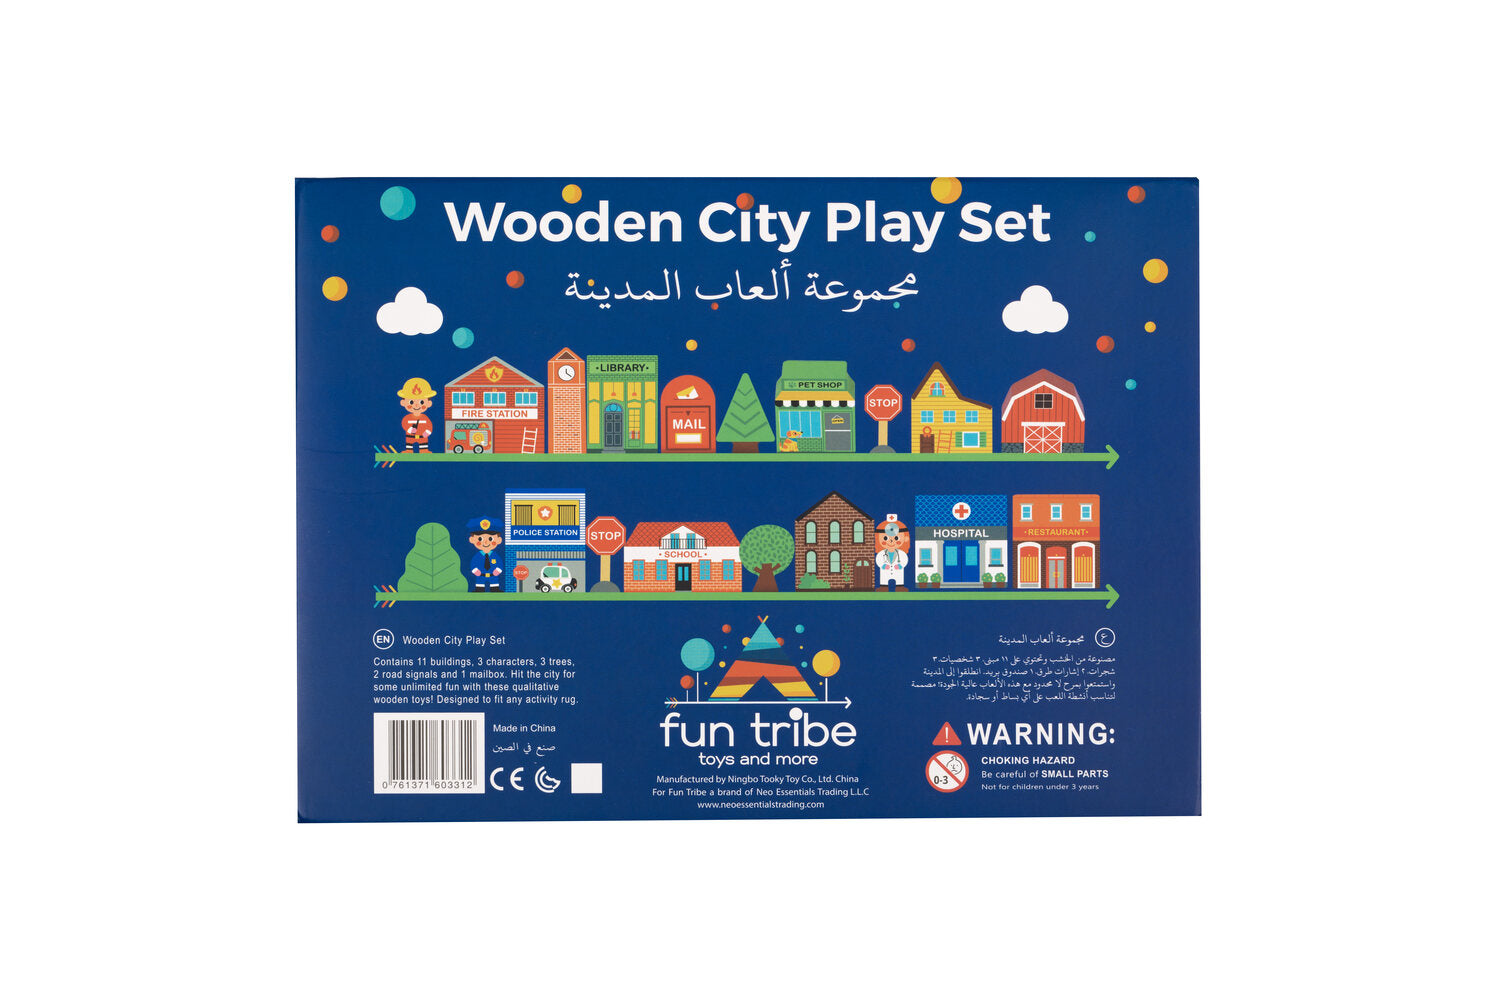 Fun Tribe Wooden City Play Set